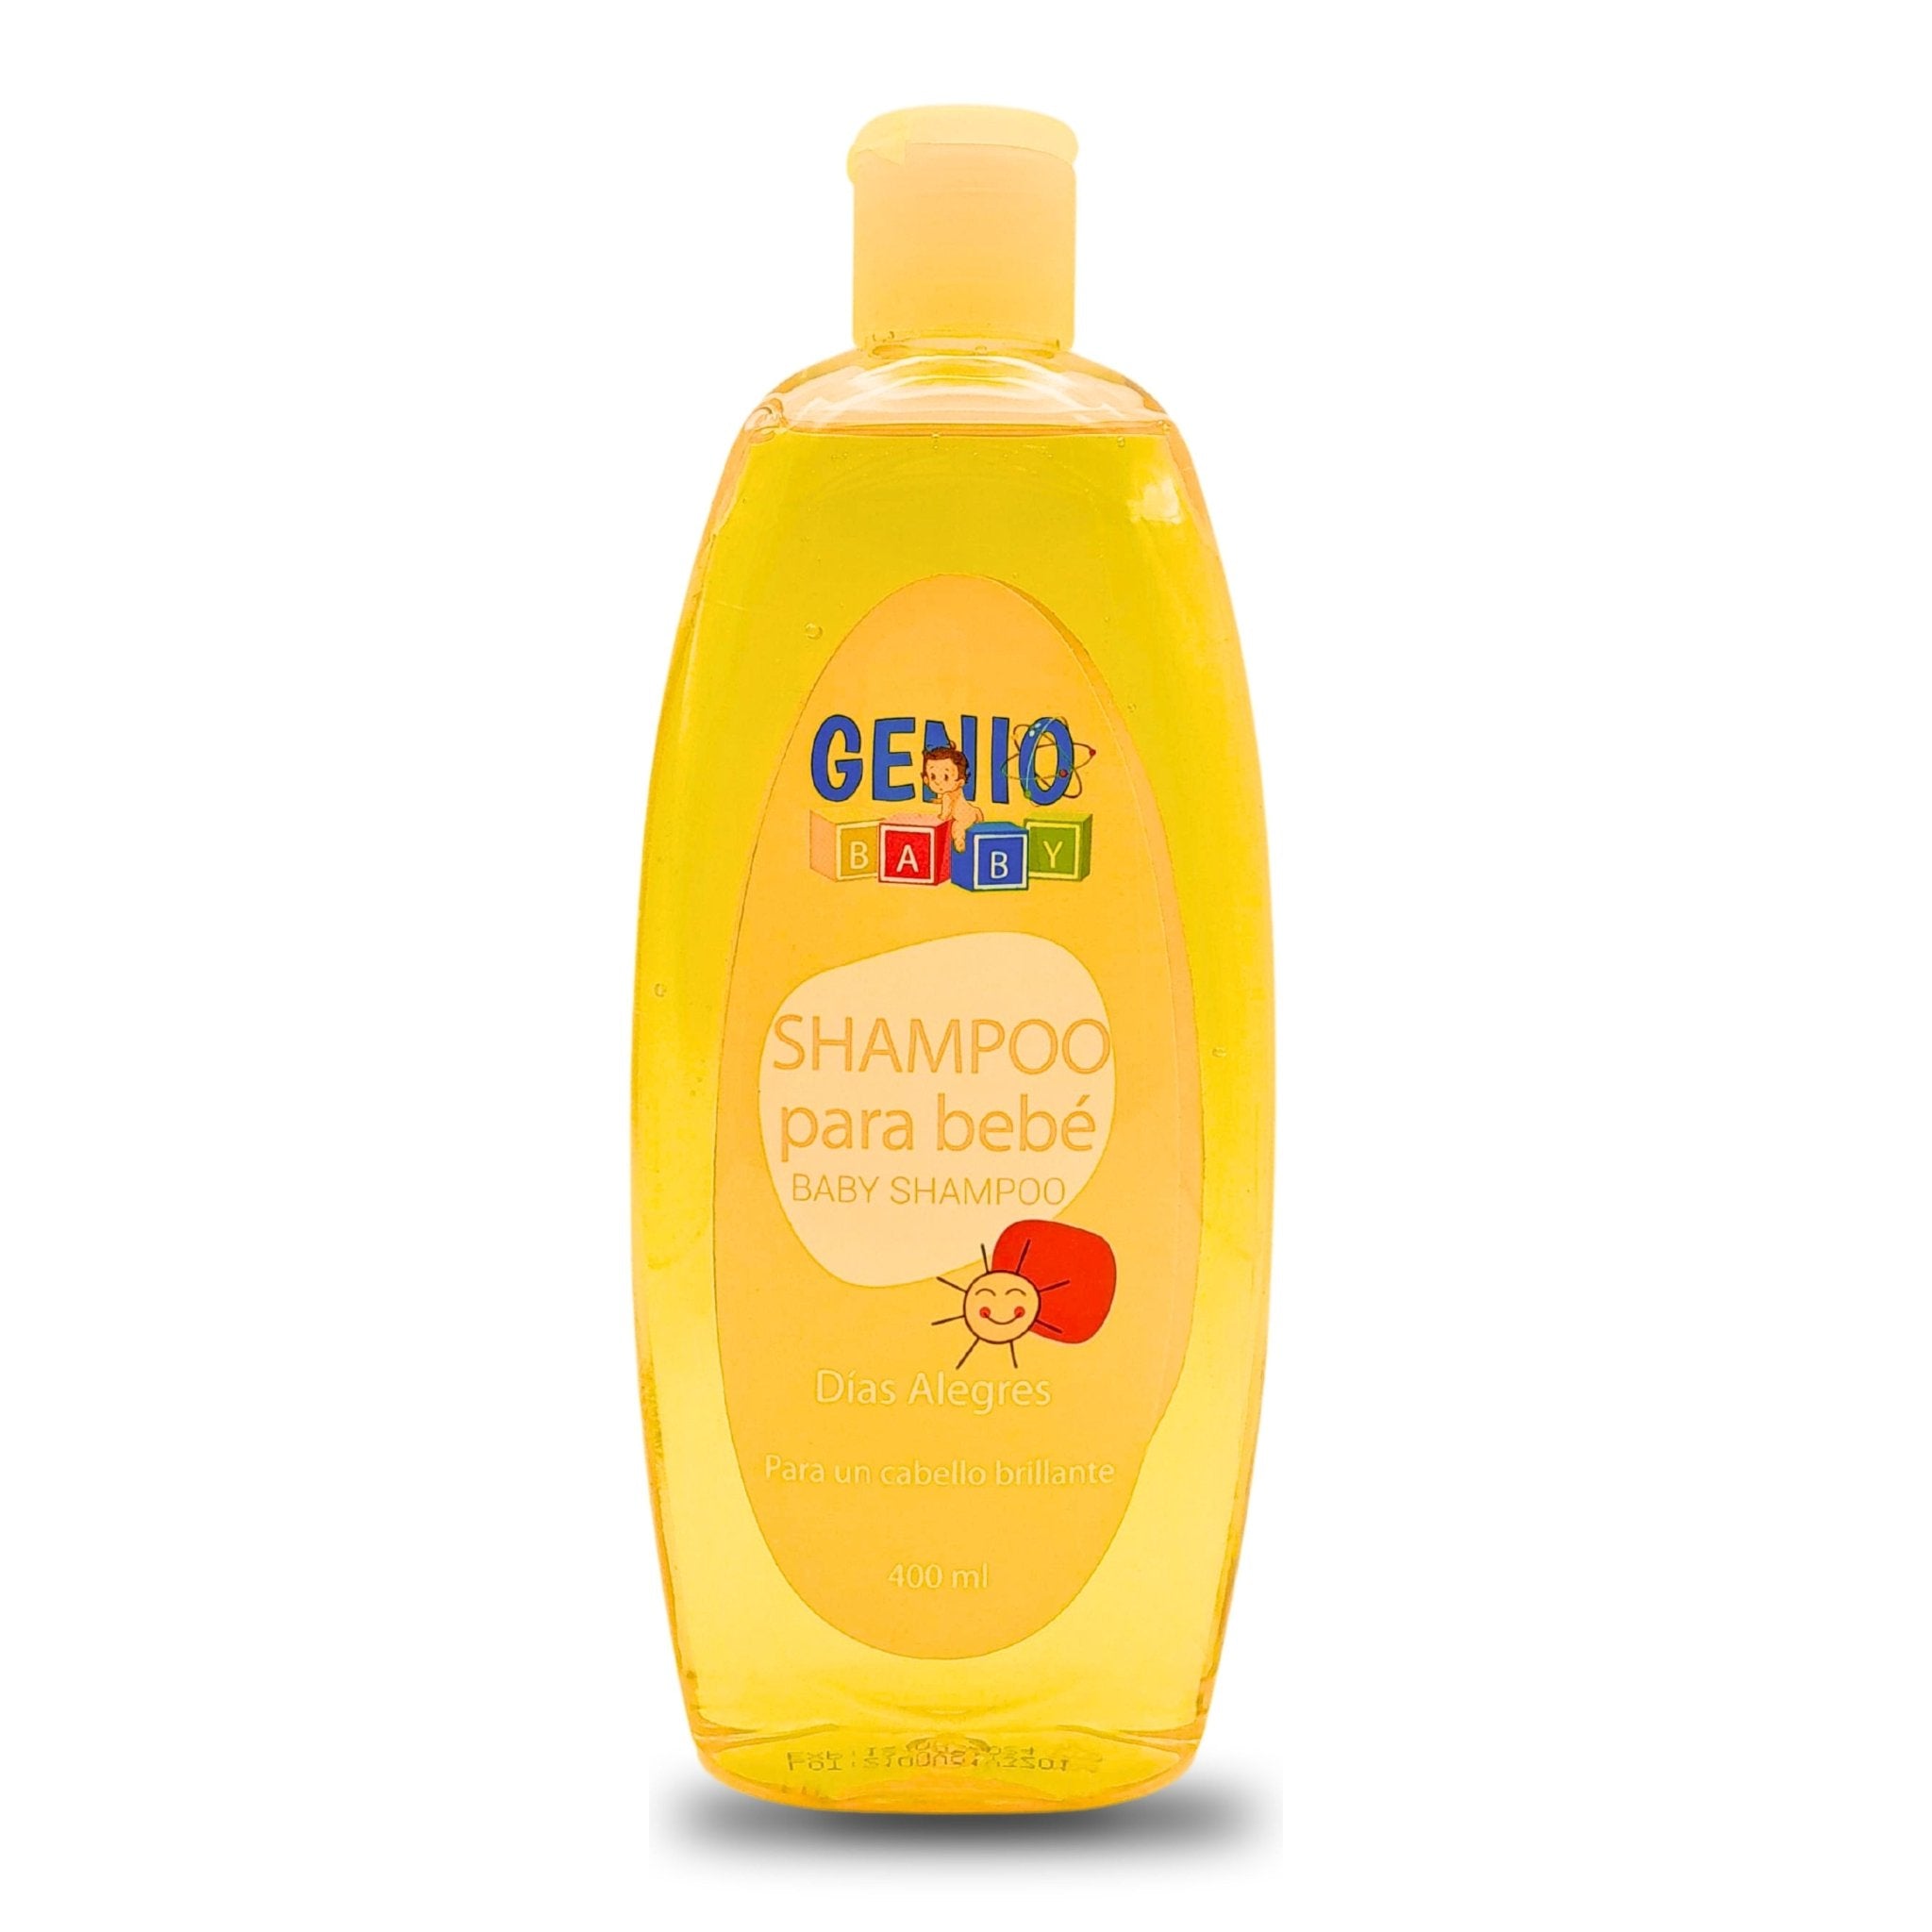 Shampoo Para Bebe 400ml - AjSilesS51-0967